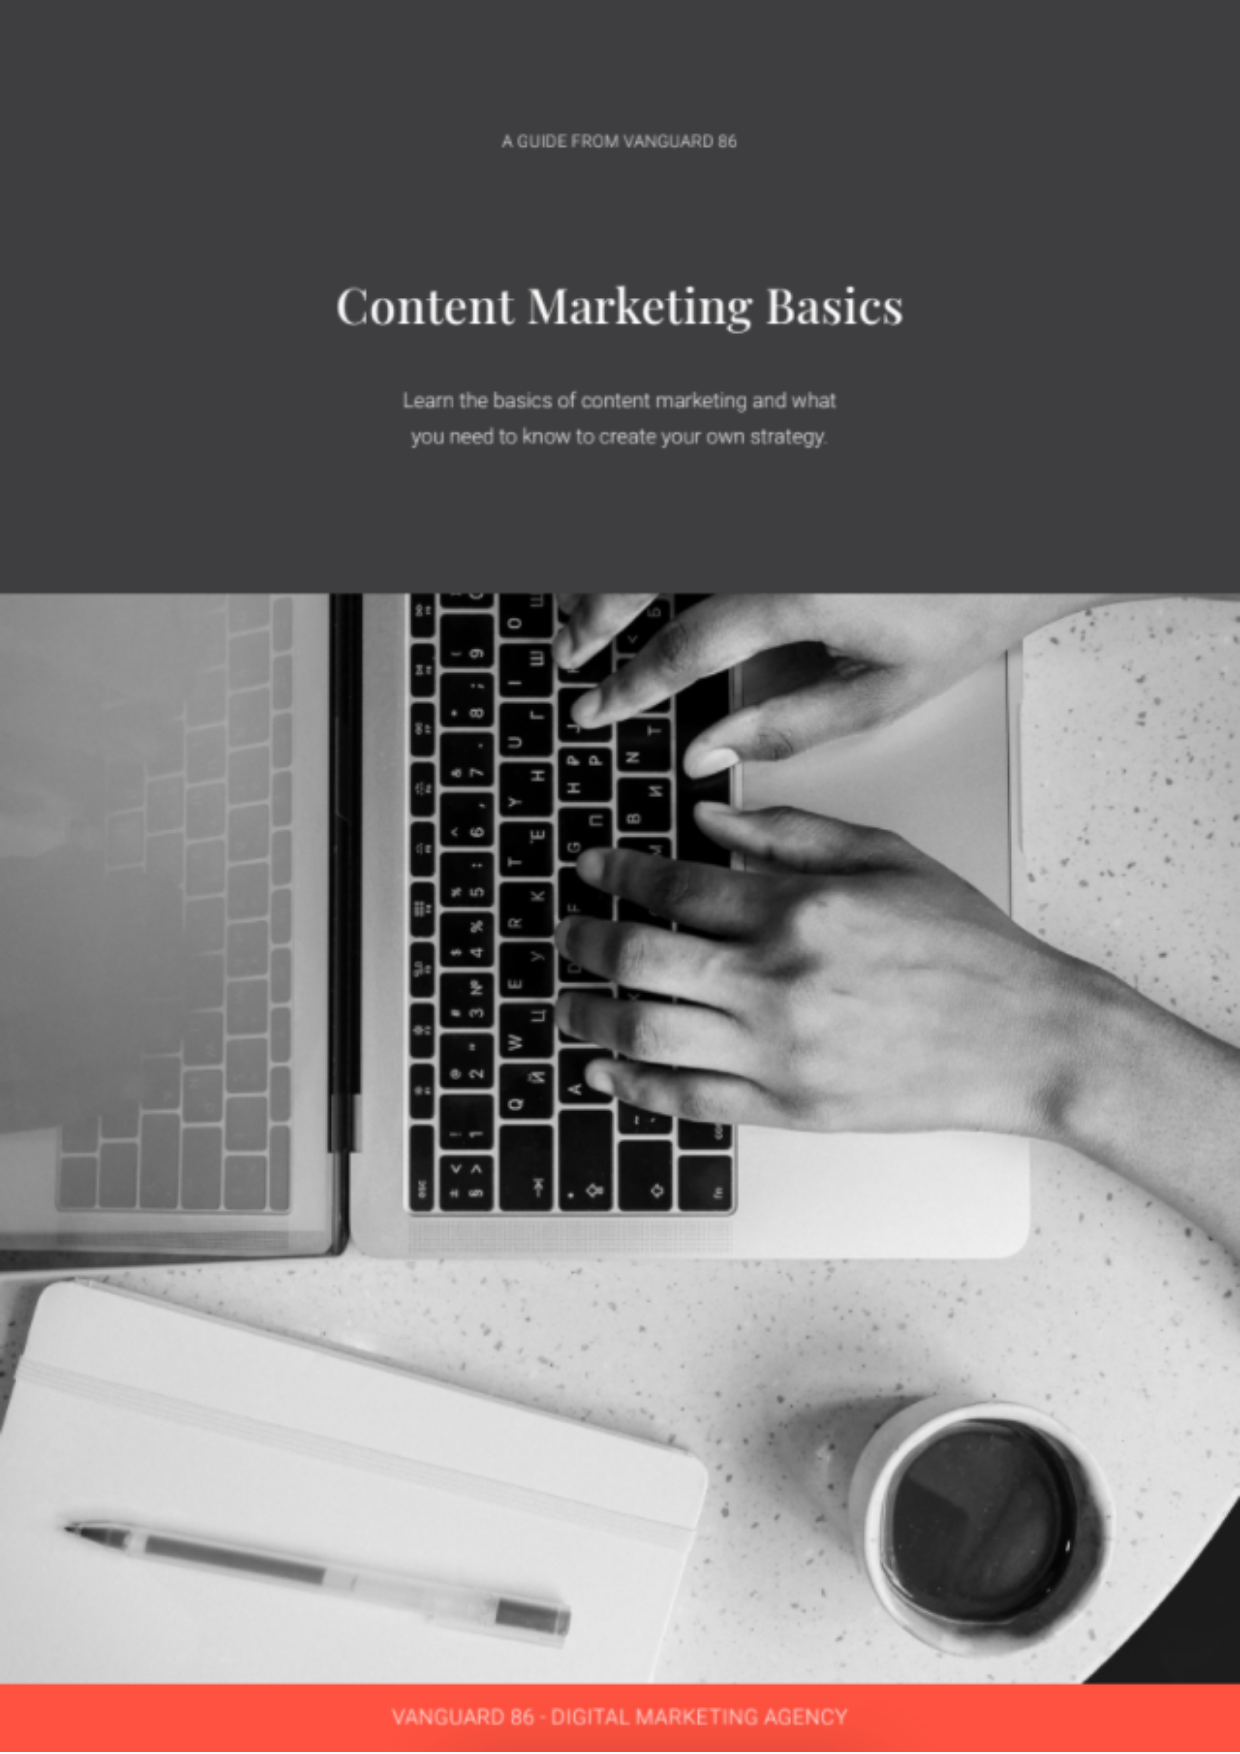 Content marketing basics